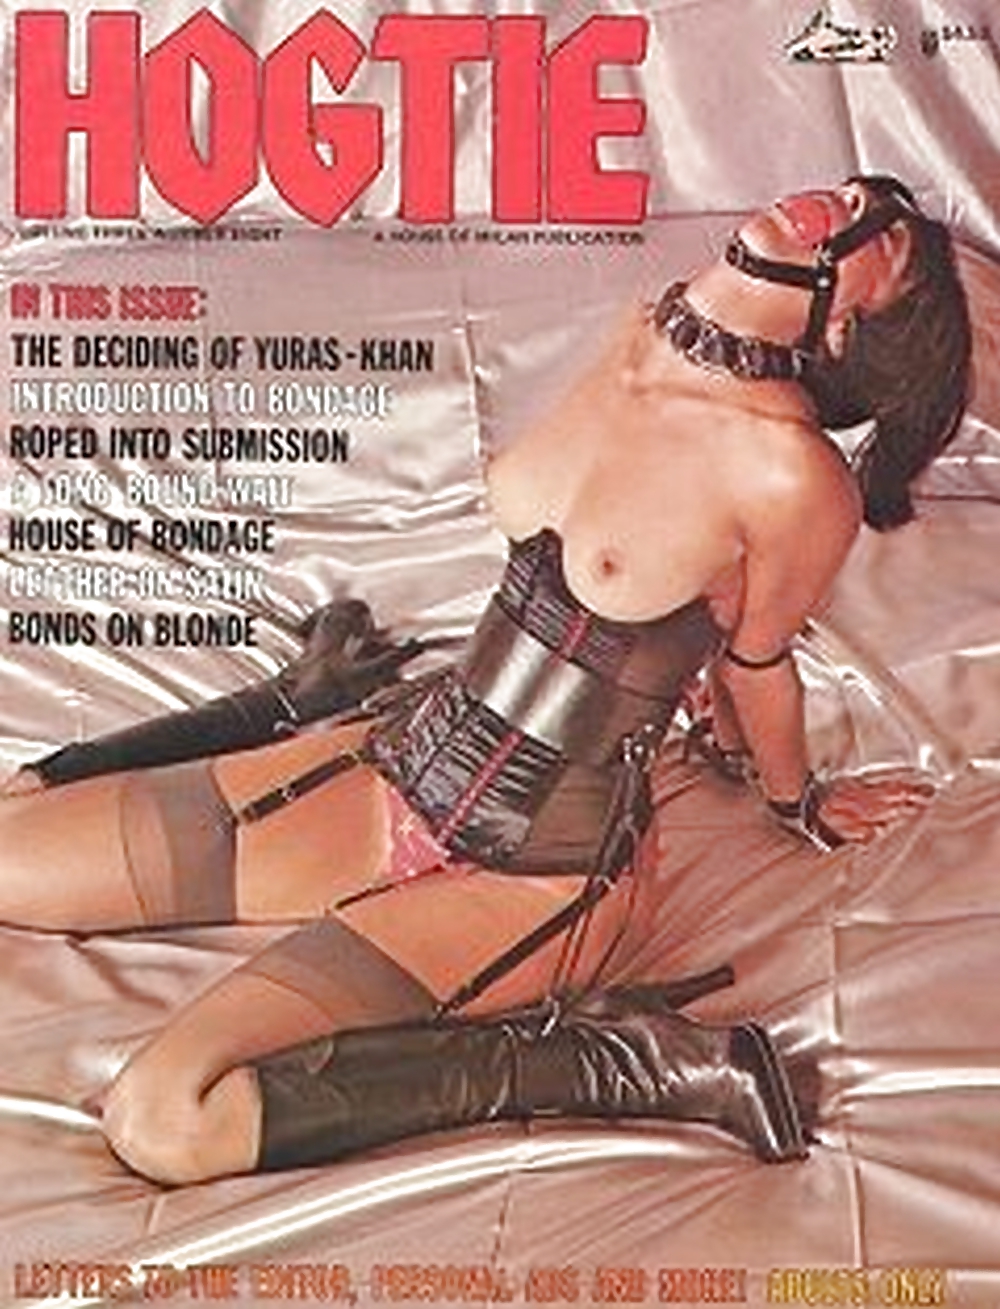 Le mie riviste bondage d'epoca (copertine) parte 3
 #24512712